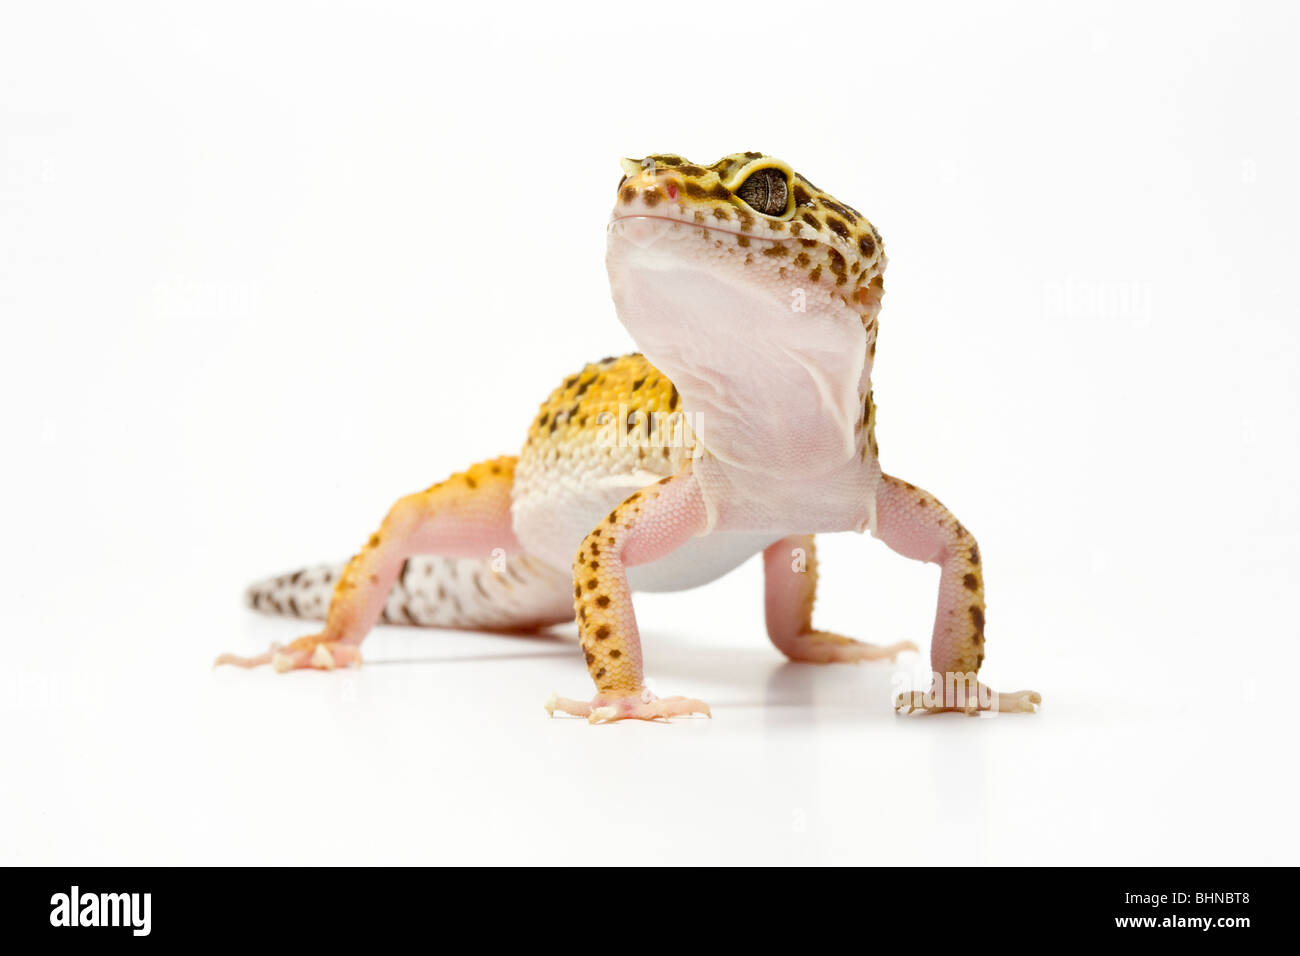 Leopard Gecko, Eublepharus macularius, on a white background Stock Photo